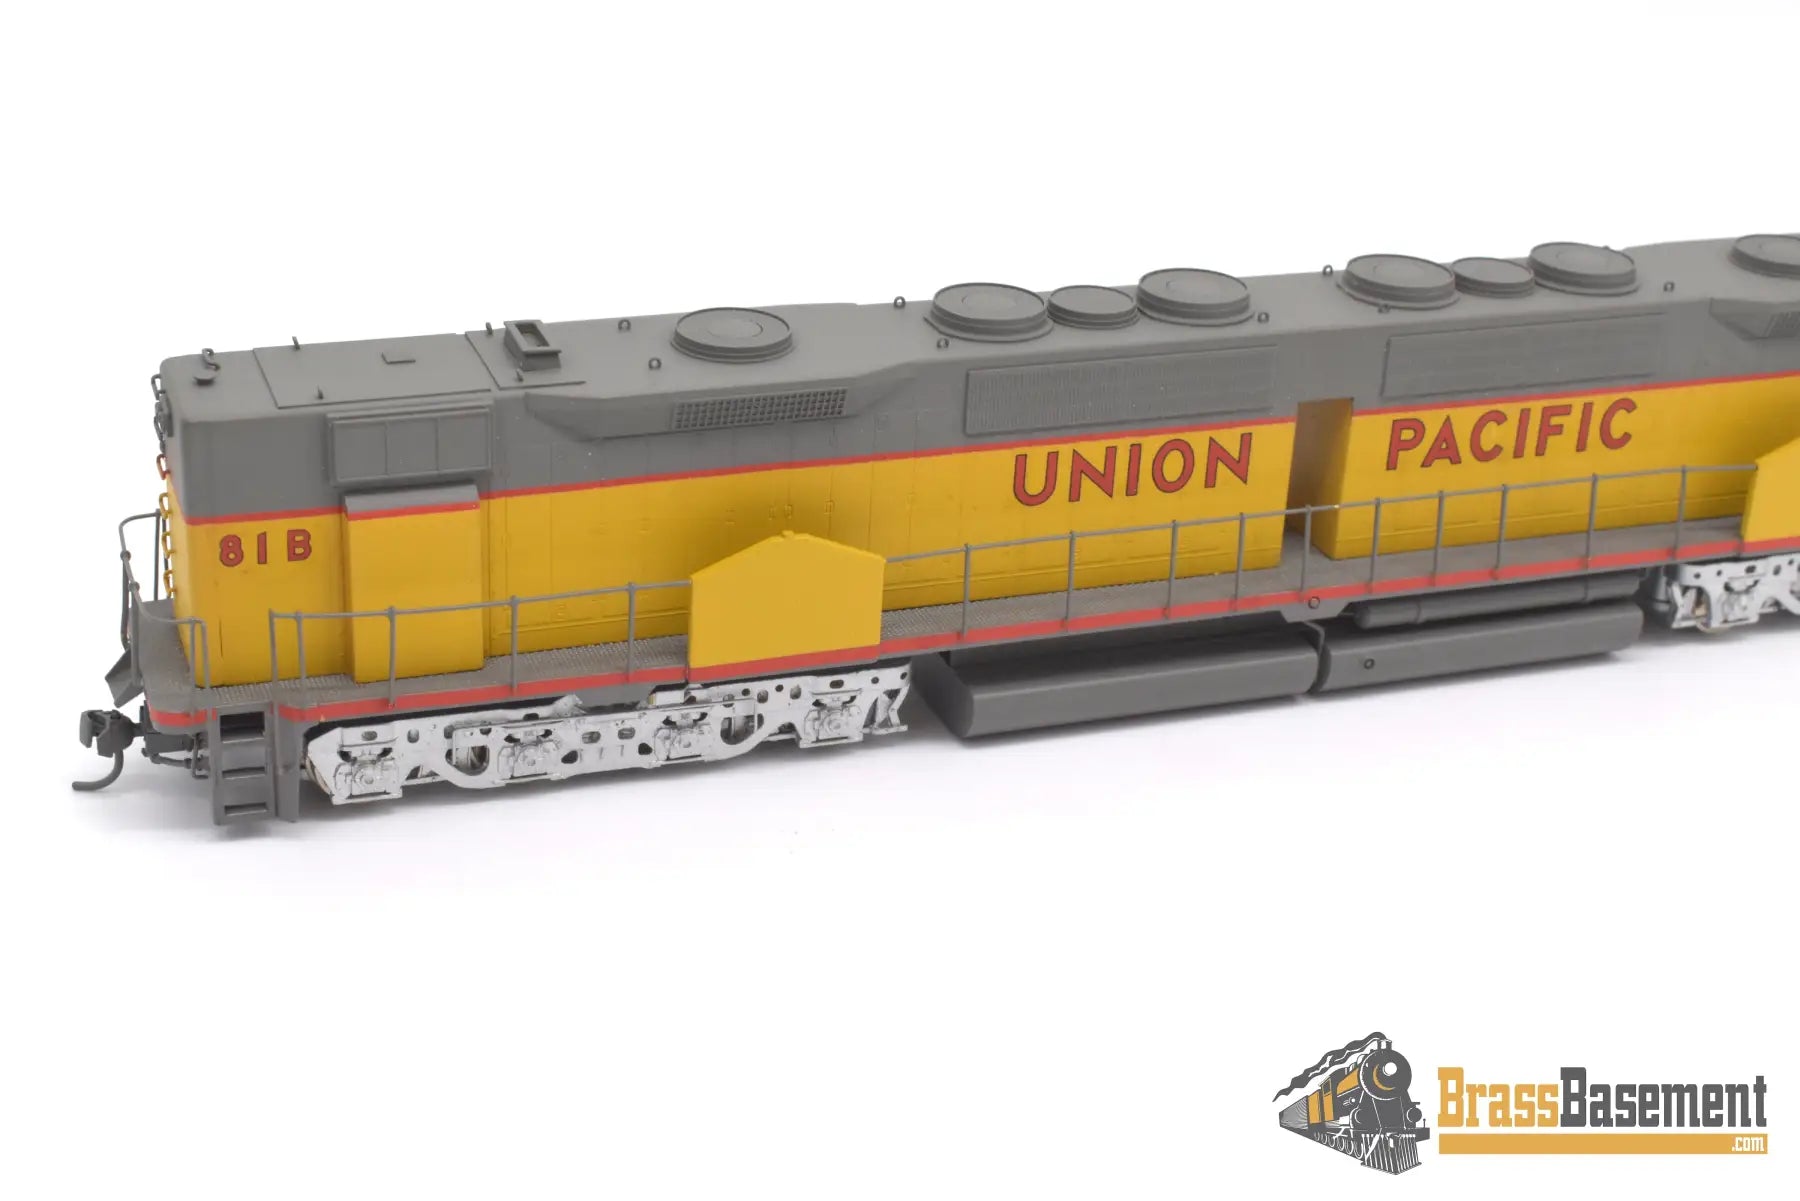 Ho Brass - Alco Models Union Pacific Up Emd Dd - 35B #81B Custom Painted Diesel